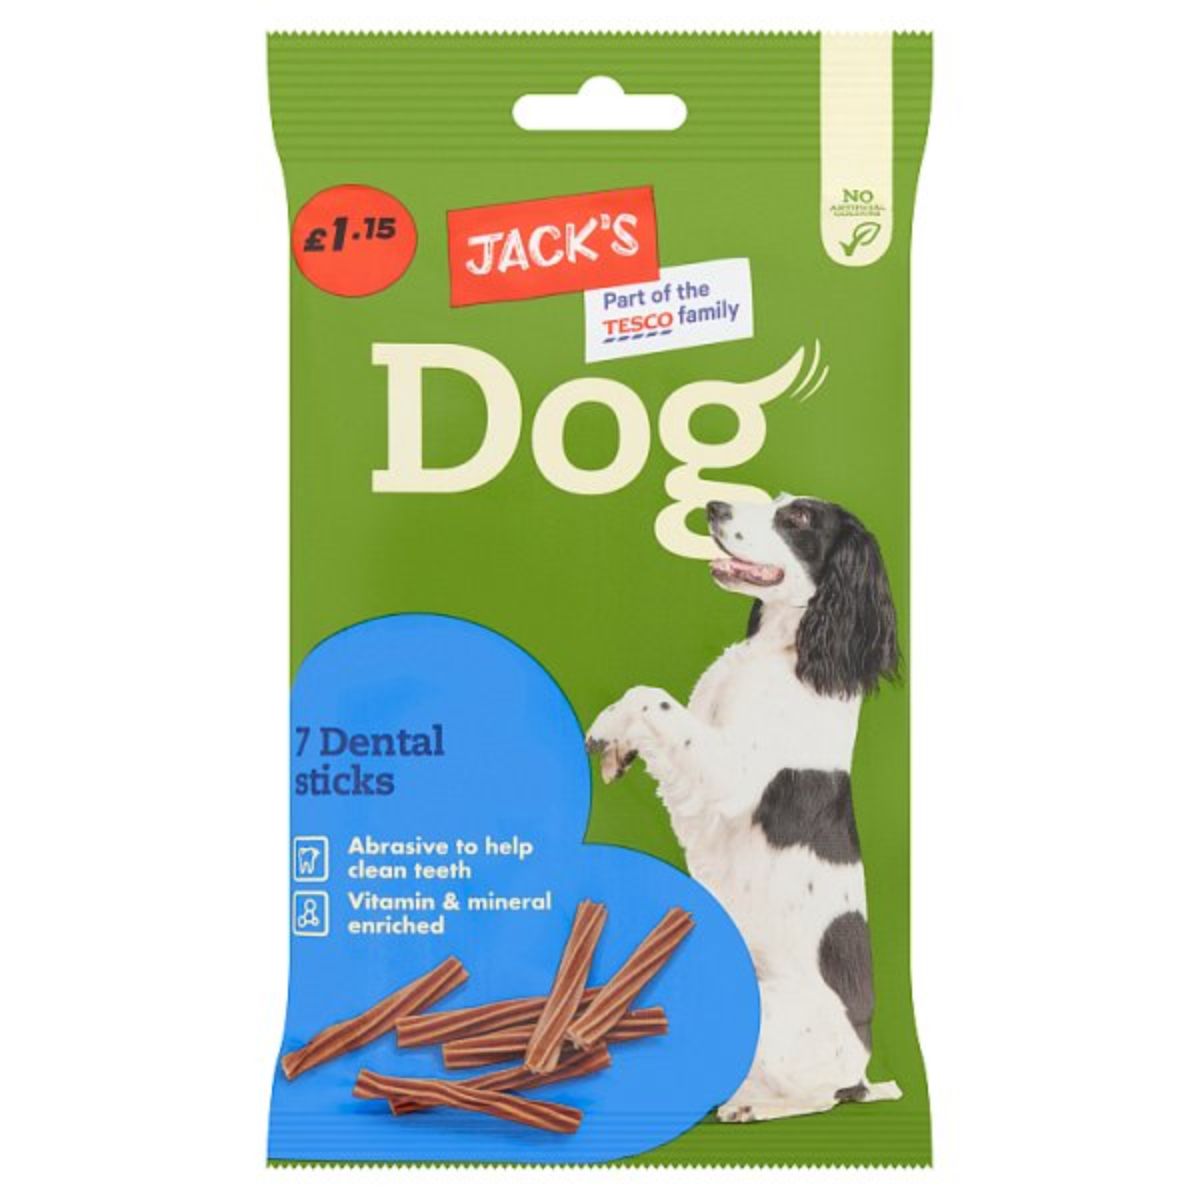 Jacks - Dog 7 Dental Sticks - 180g's dog chew sticks.